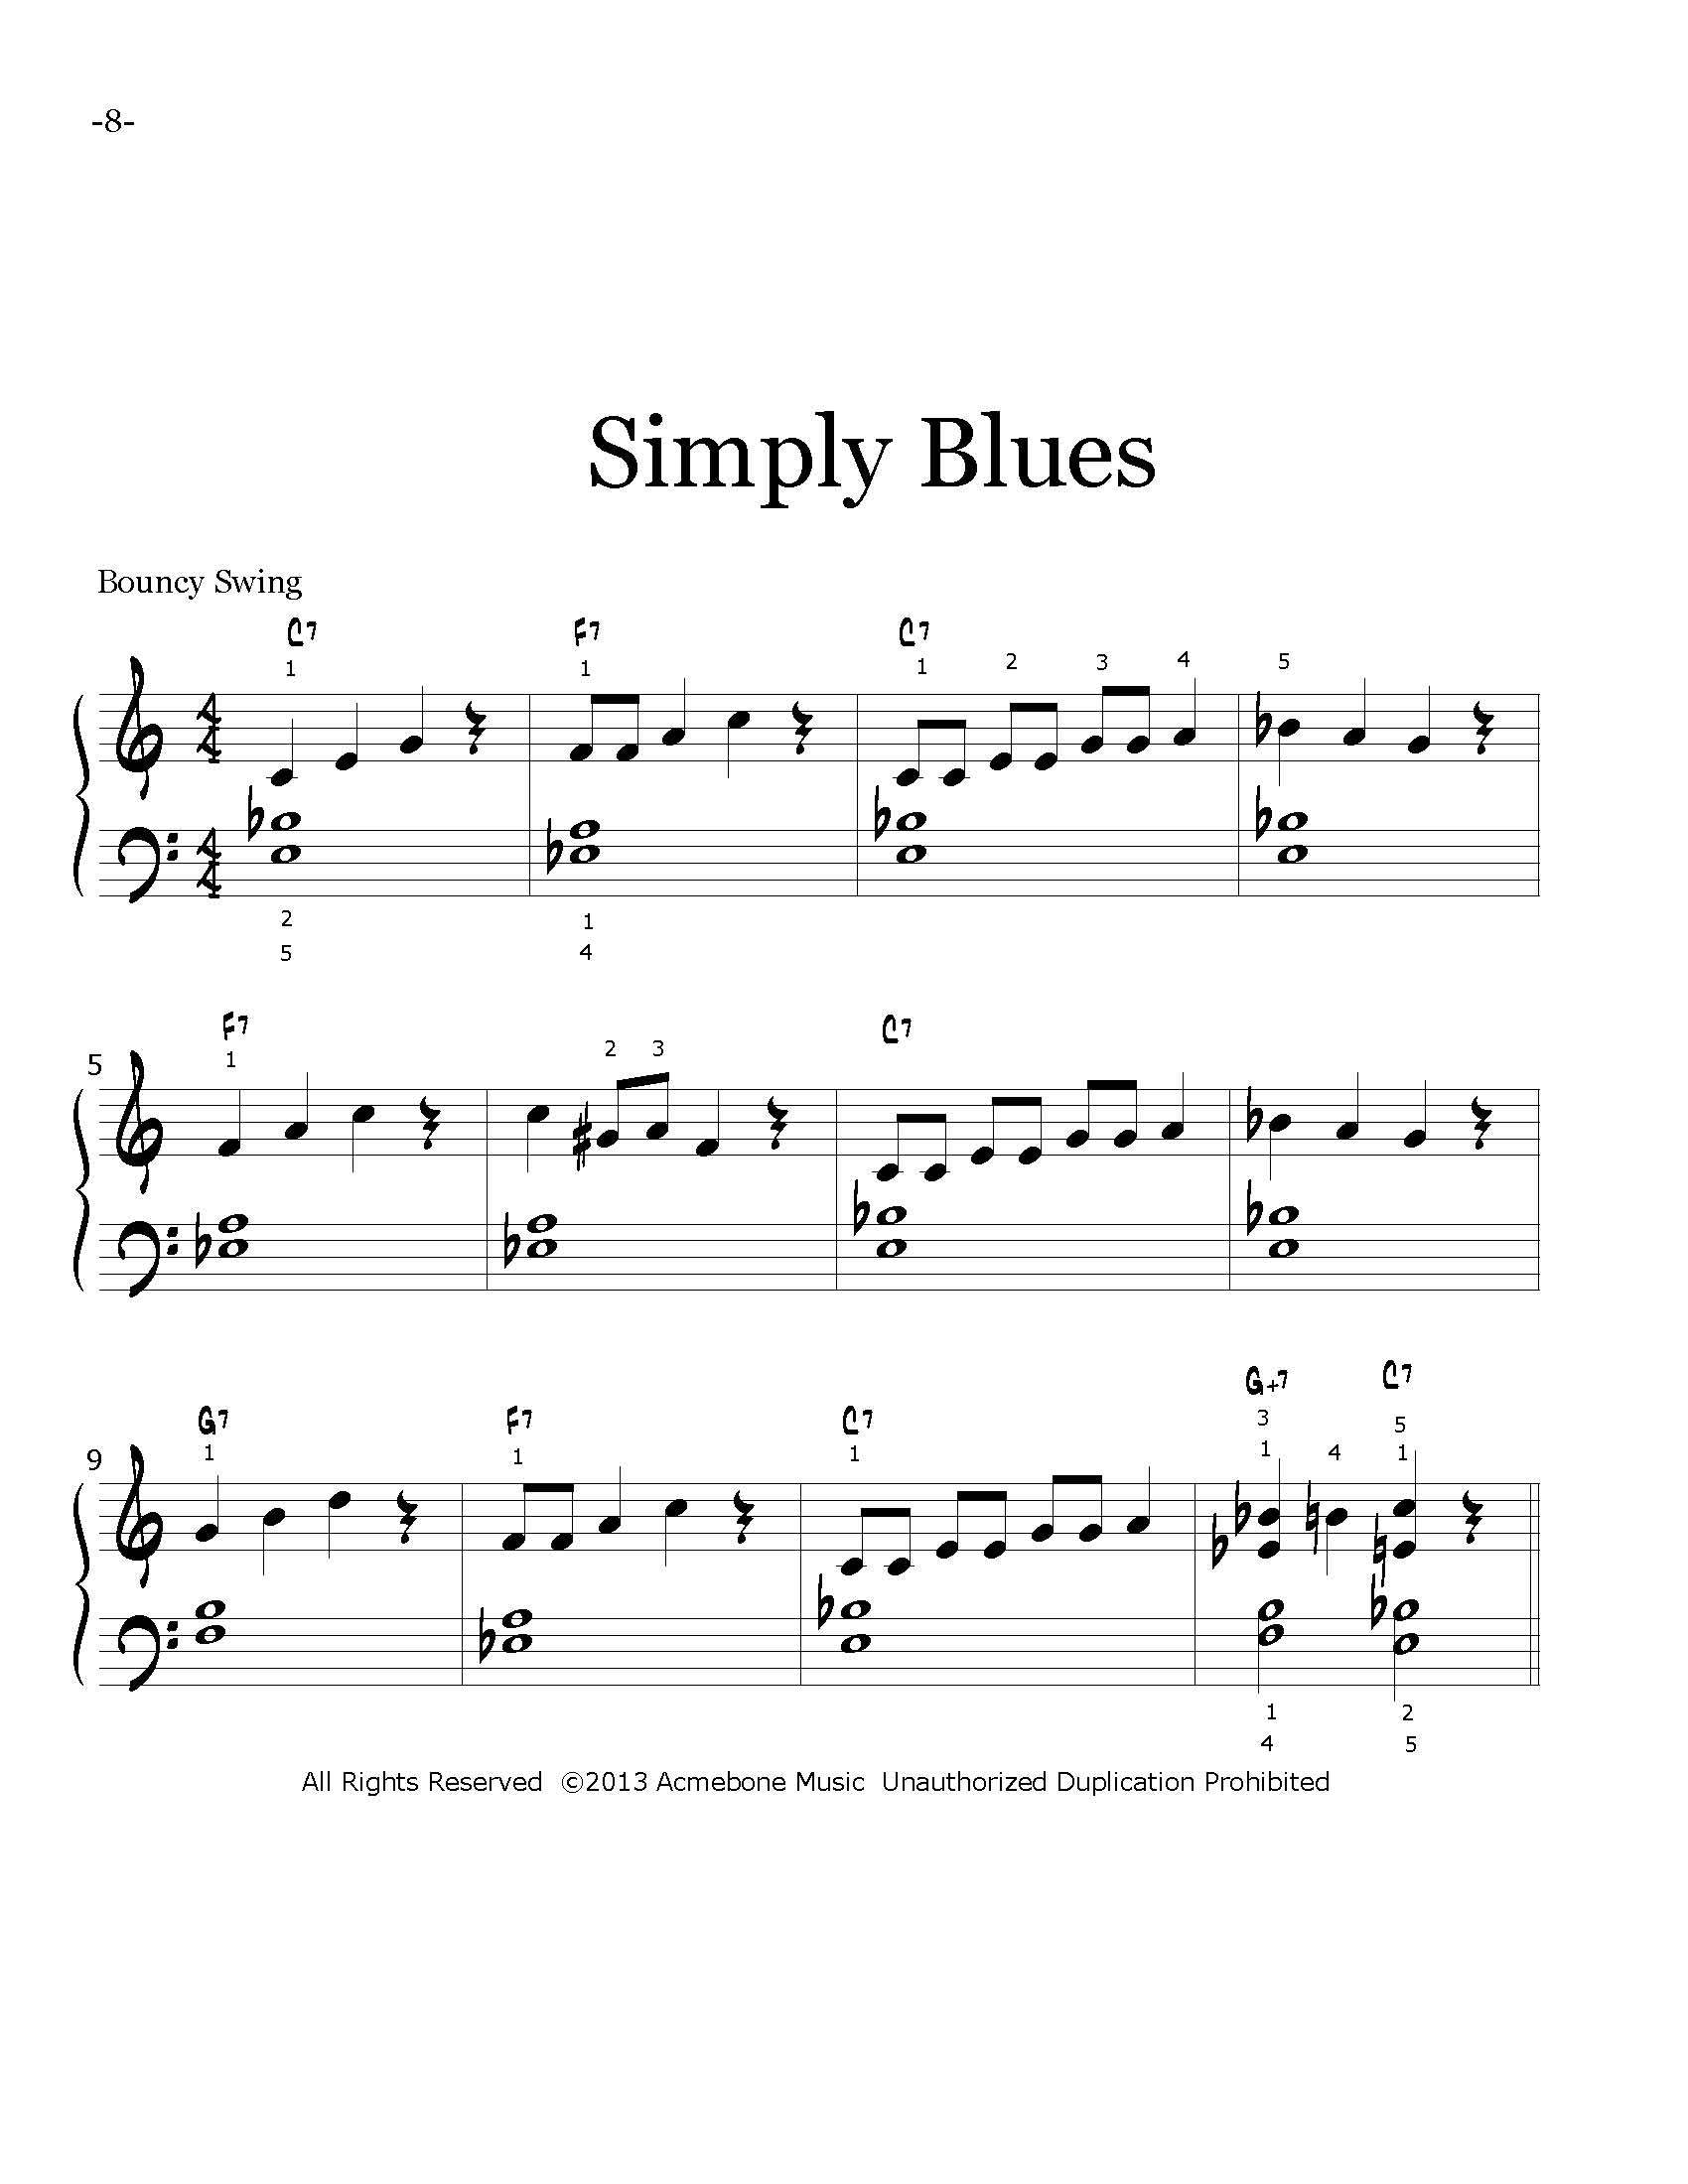 Progressive Jazz Etudes for Piano bk1 for web_Page_09.jpg